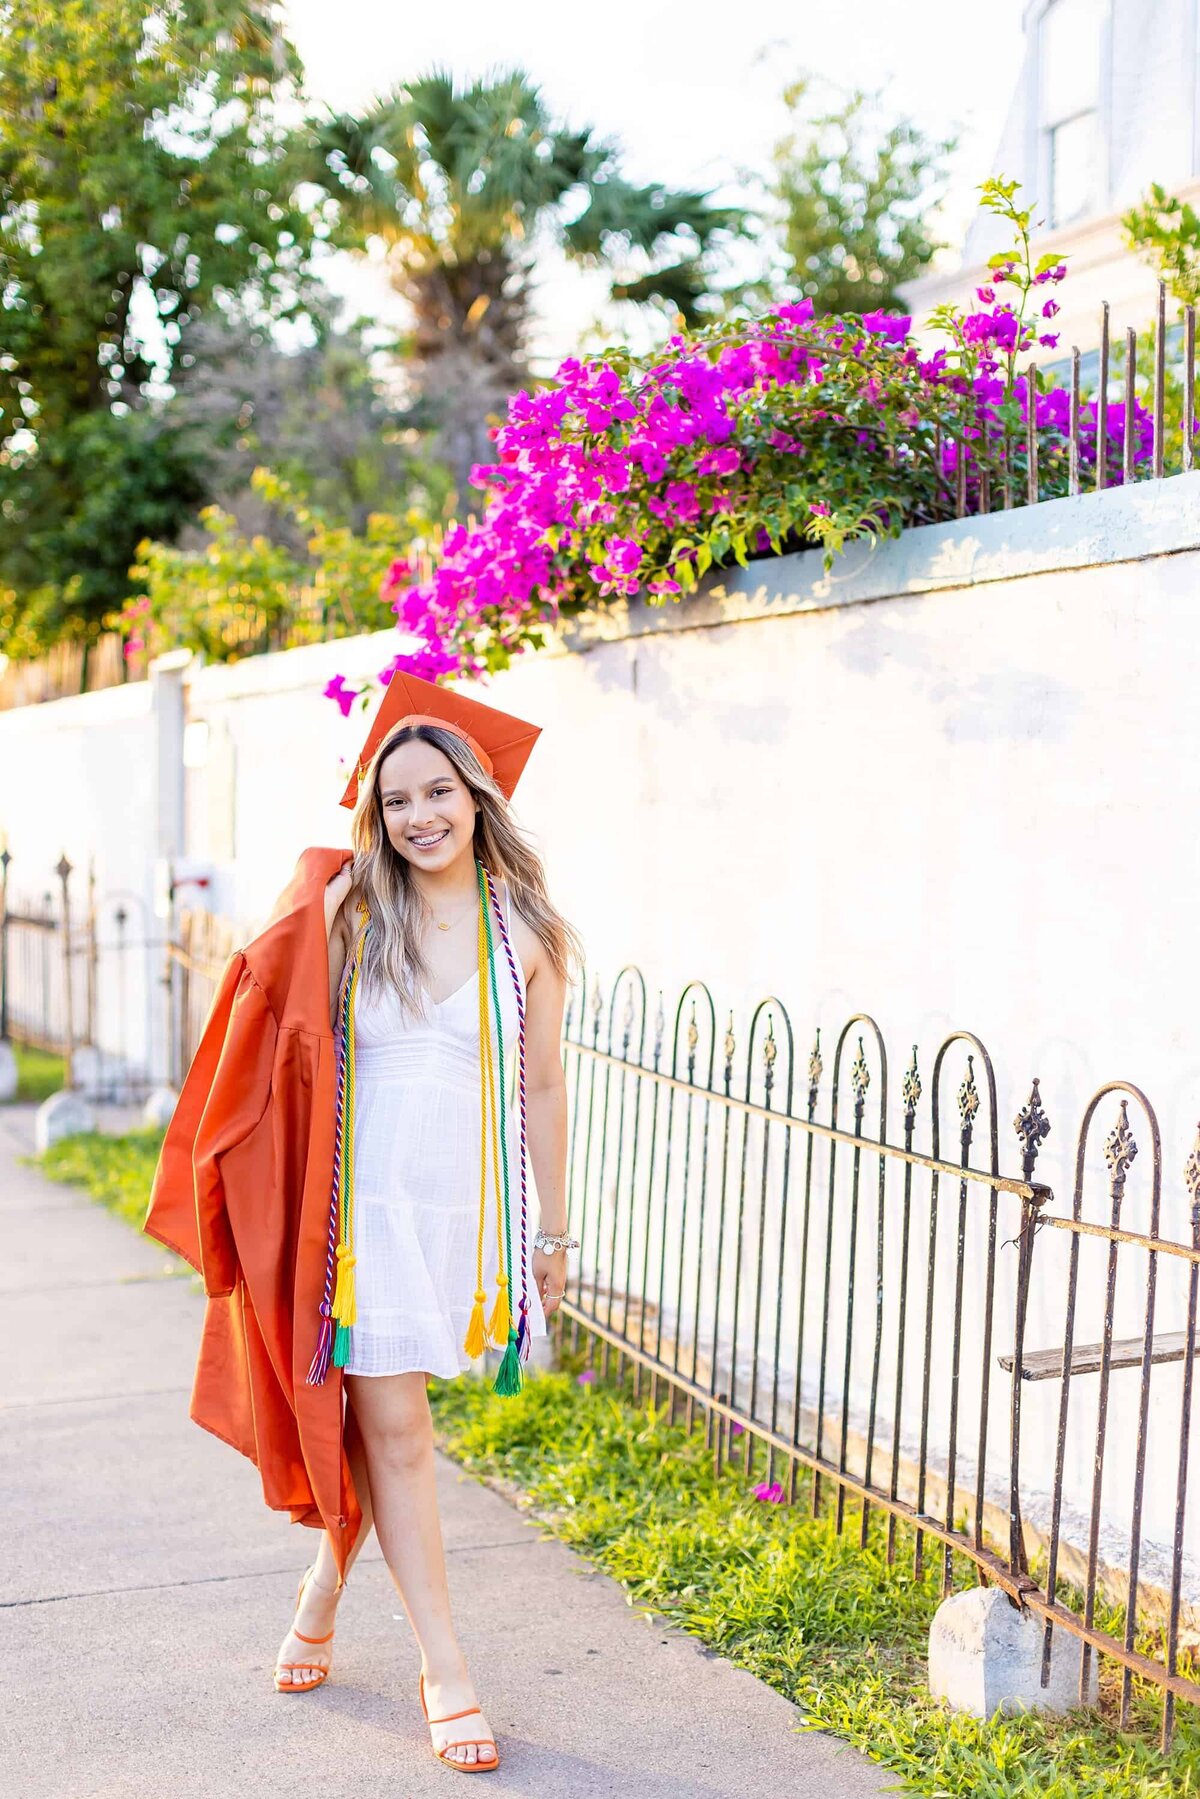 Senior girl holding graduation gown